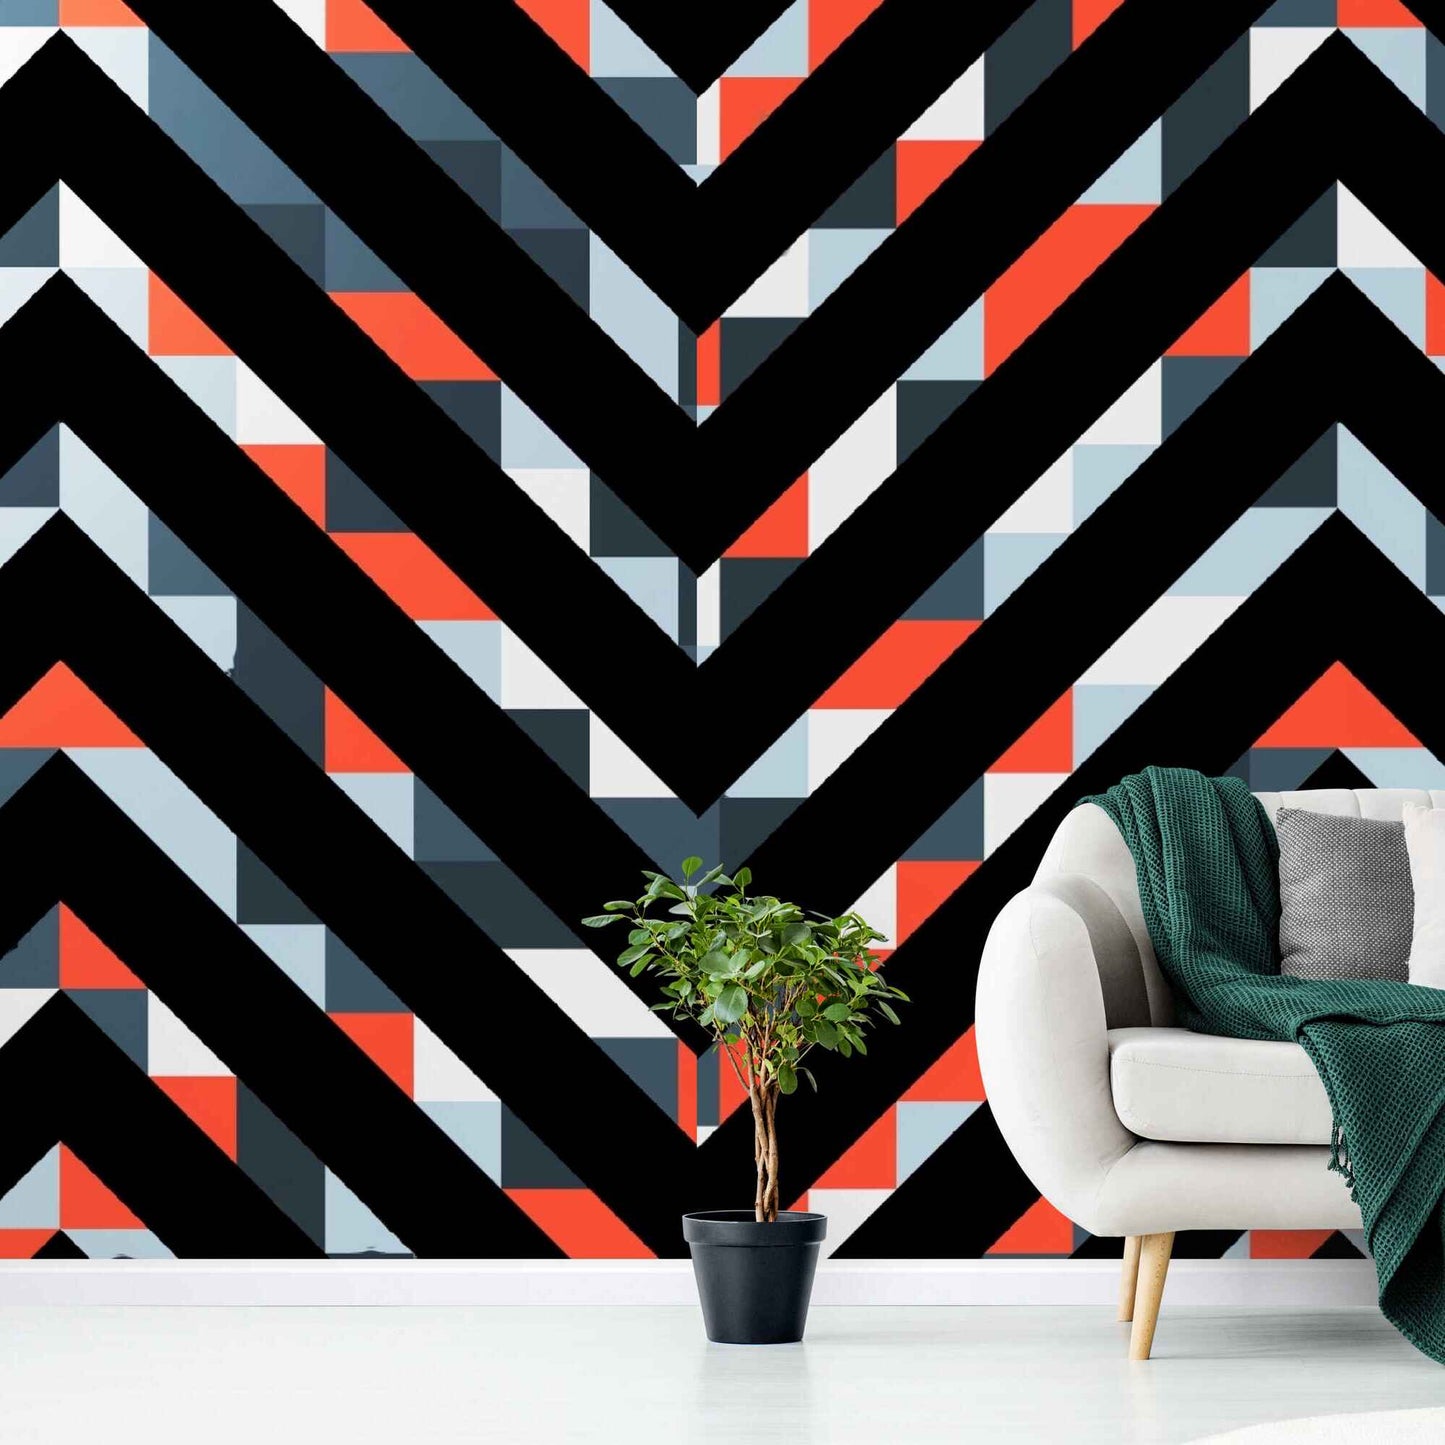 Geometric wallpaper mural showcasing captivating patterns for modern home office decor